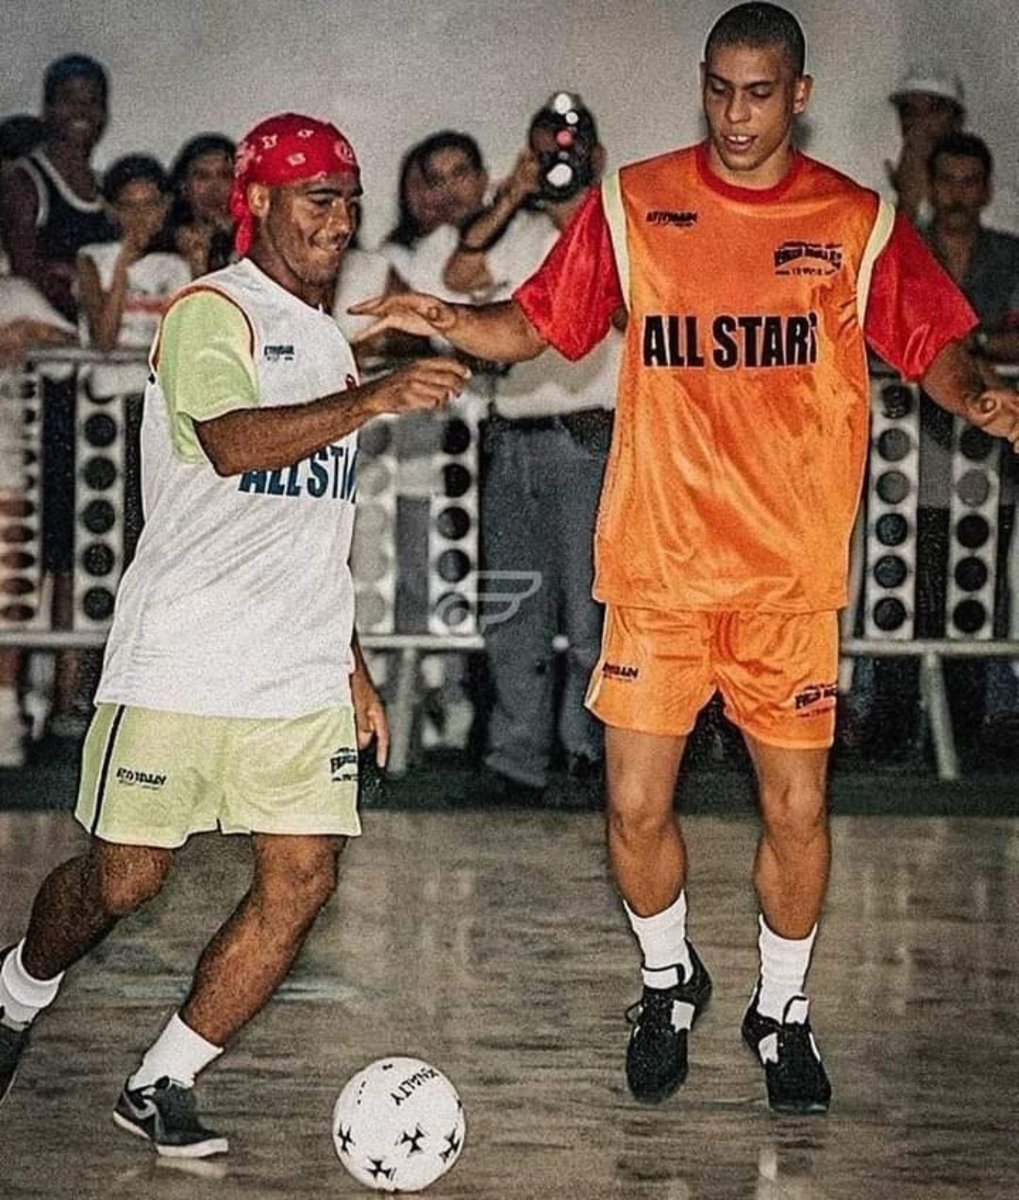 Romario and Ronaldo playing futsal 🇧🇷